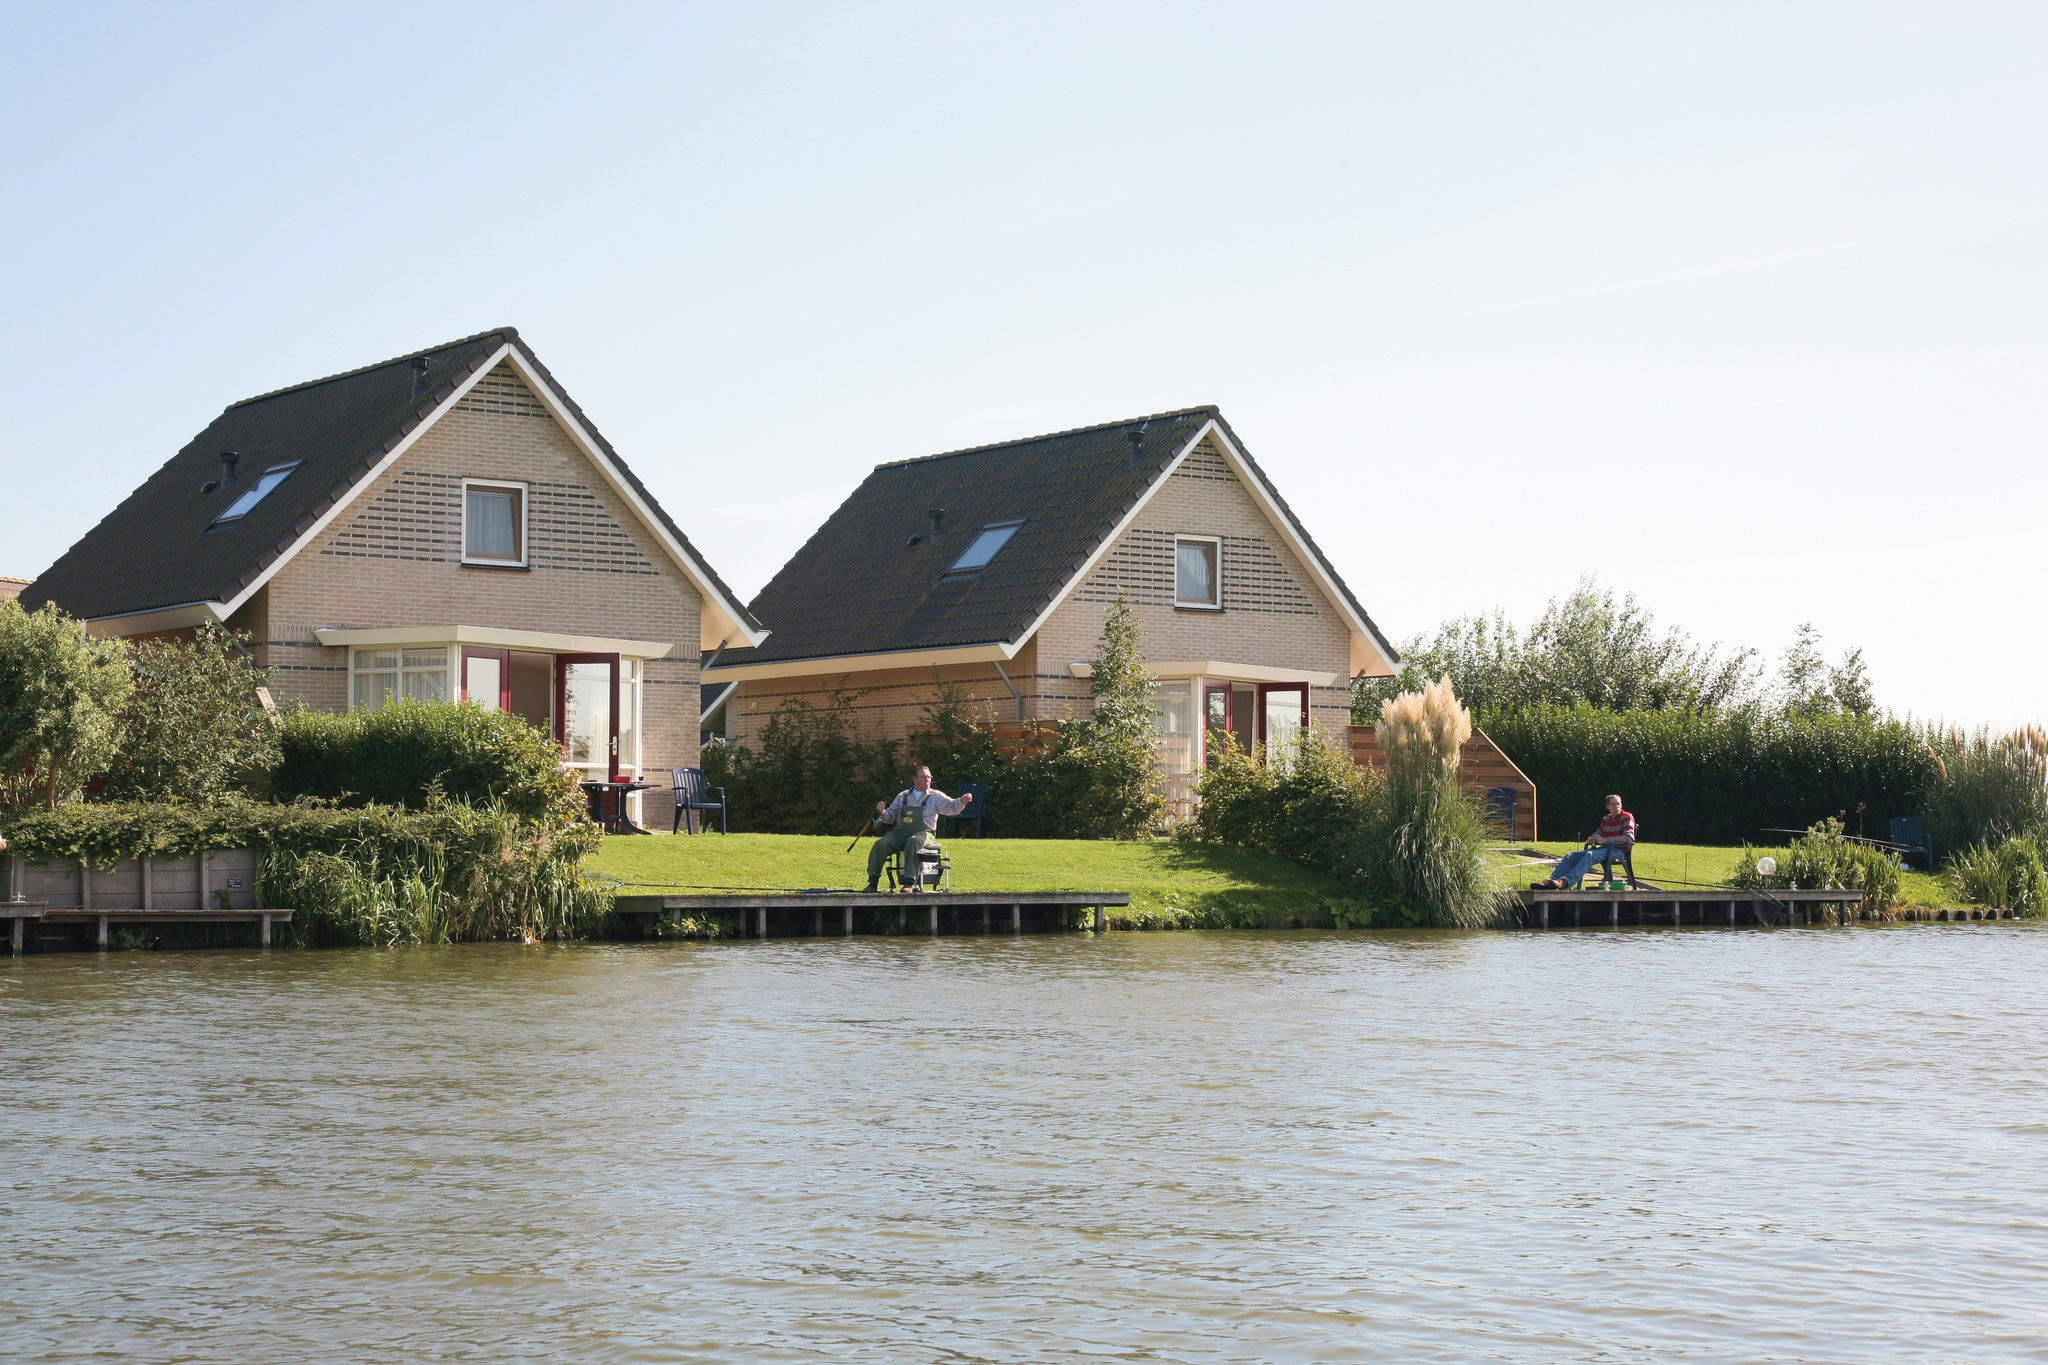 Mooie woning met aanlegsteiger nabij IJsselmeer